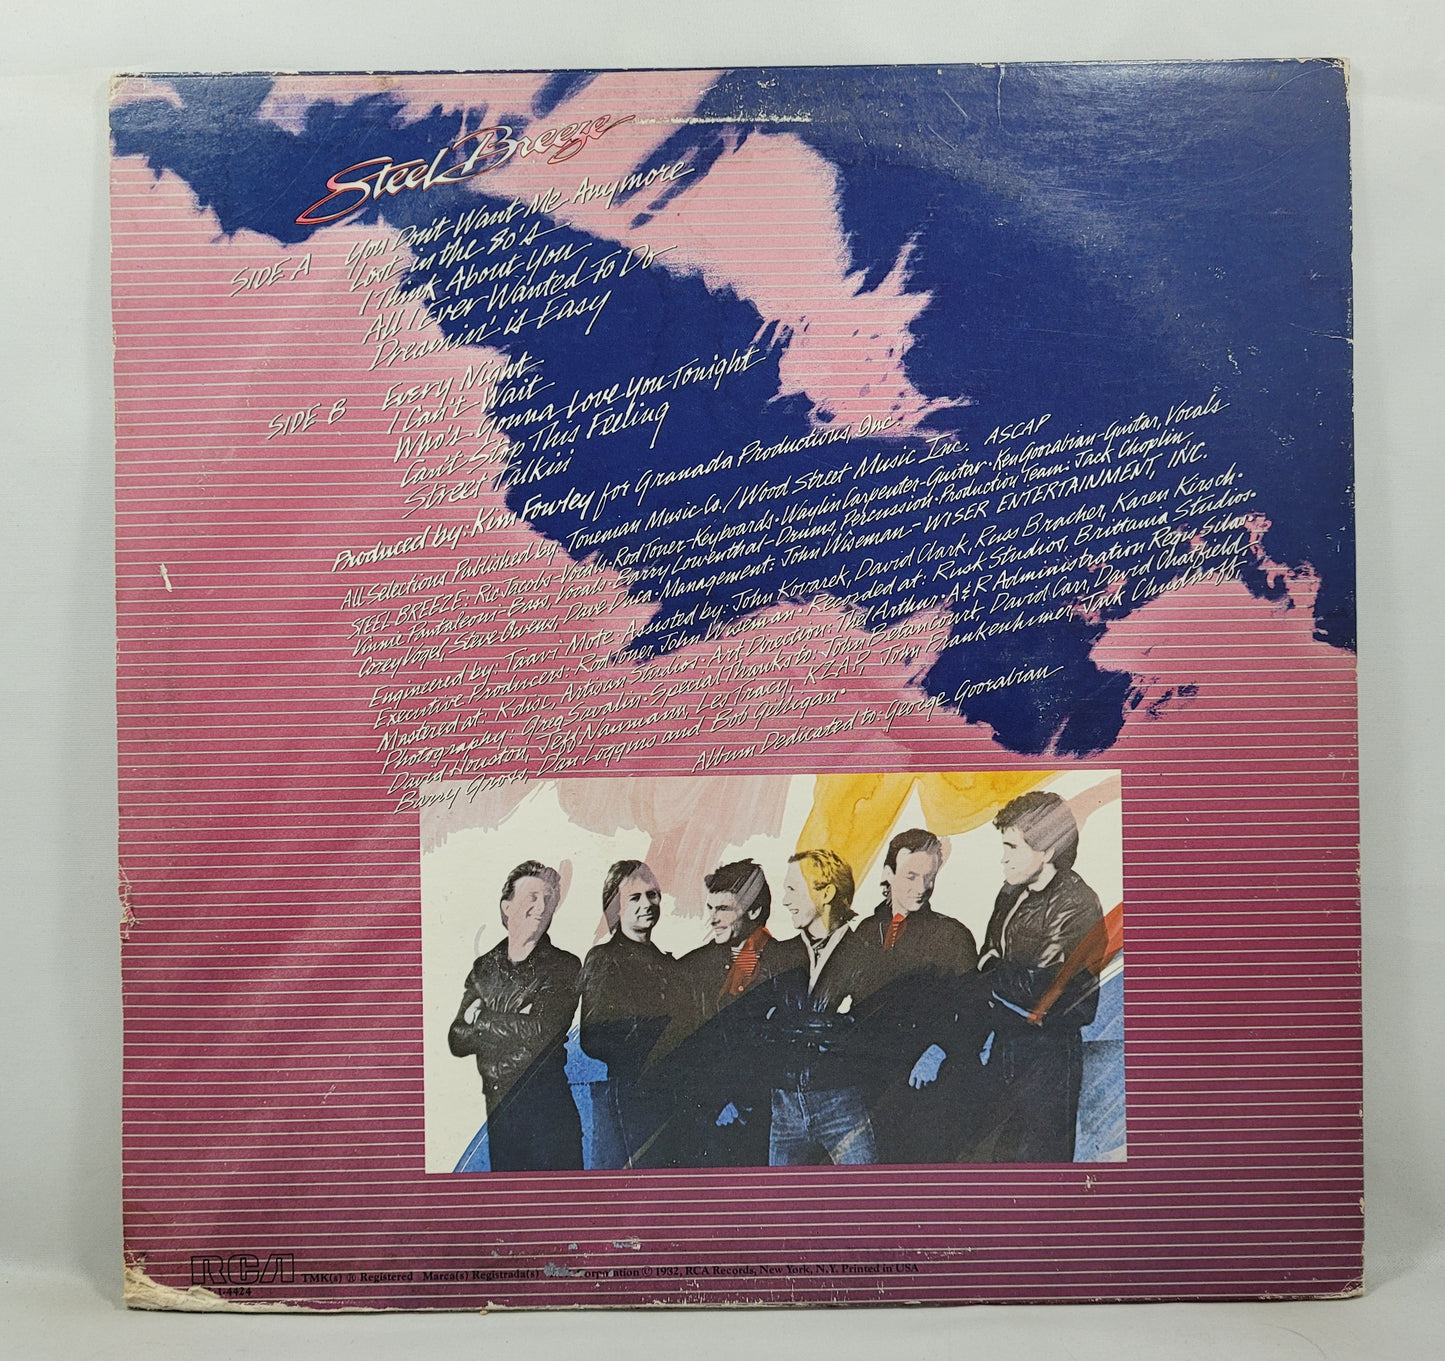 Steel Breeze - Steel Breeze [1982 Used Vinyl Record LP] [B]